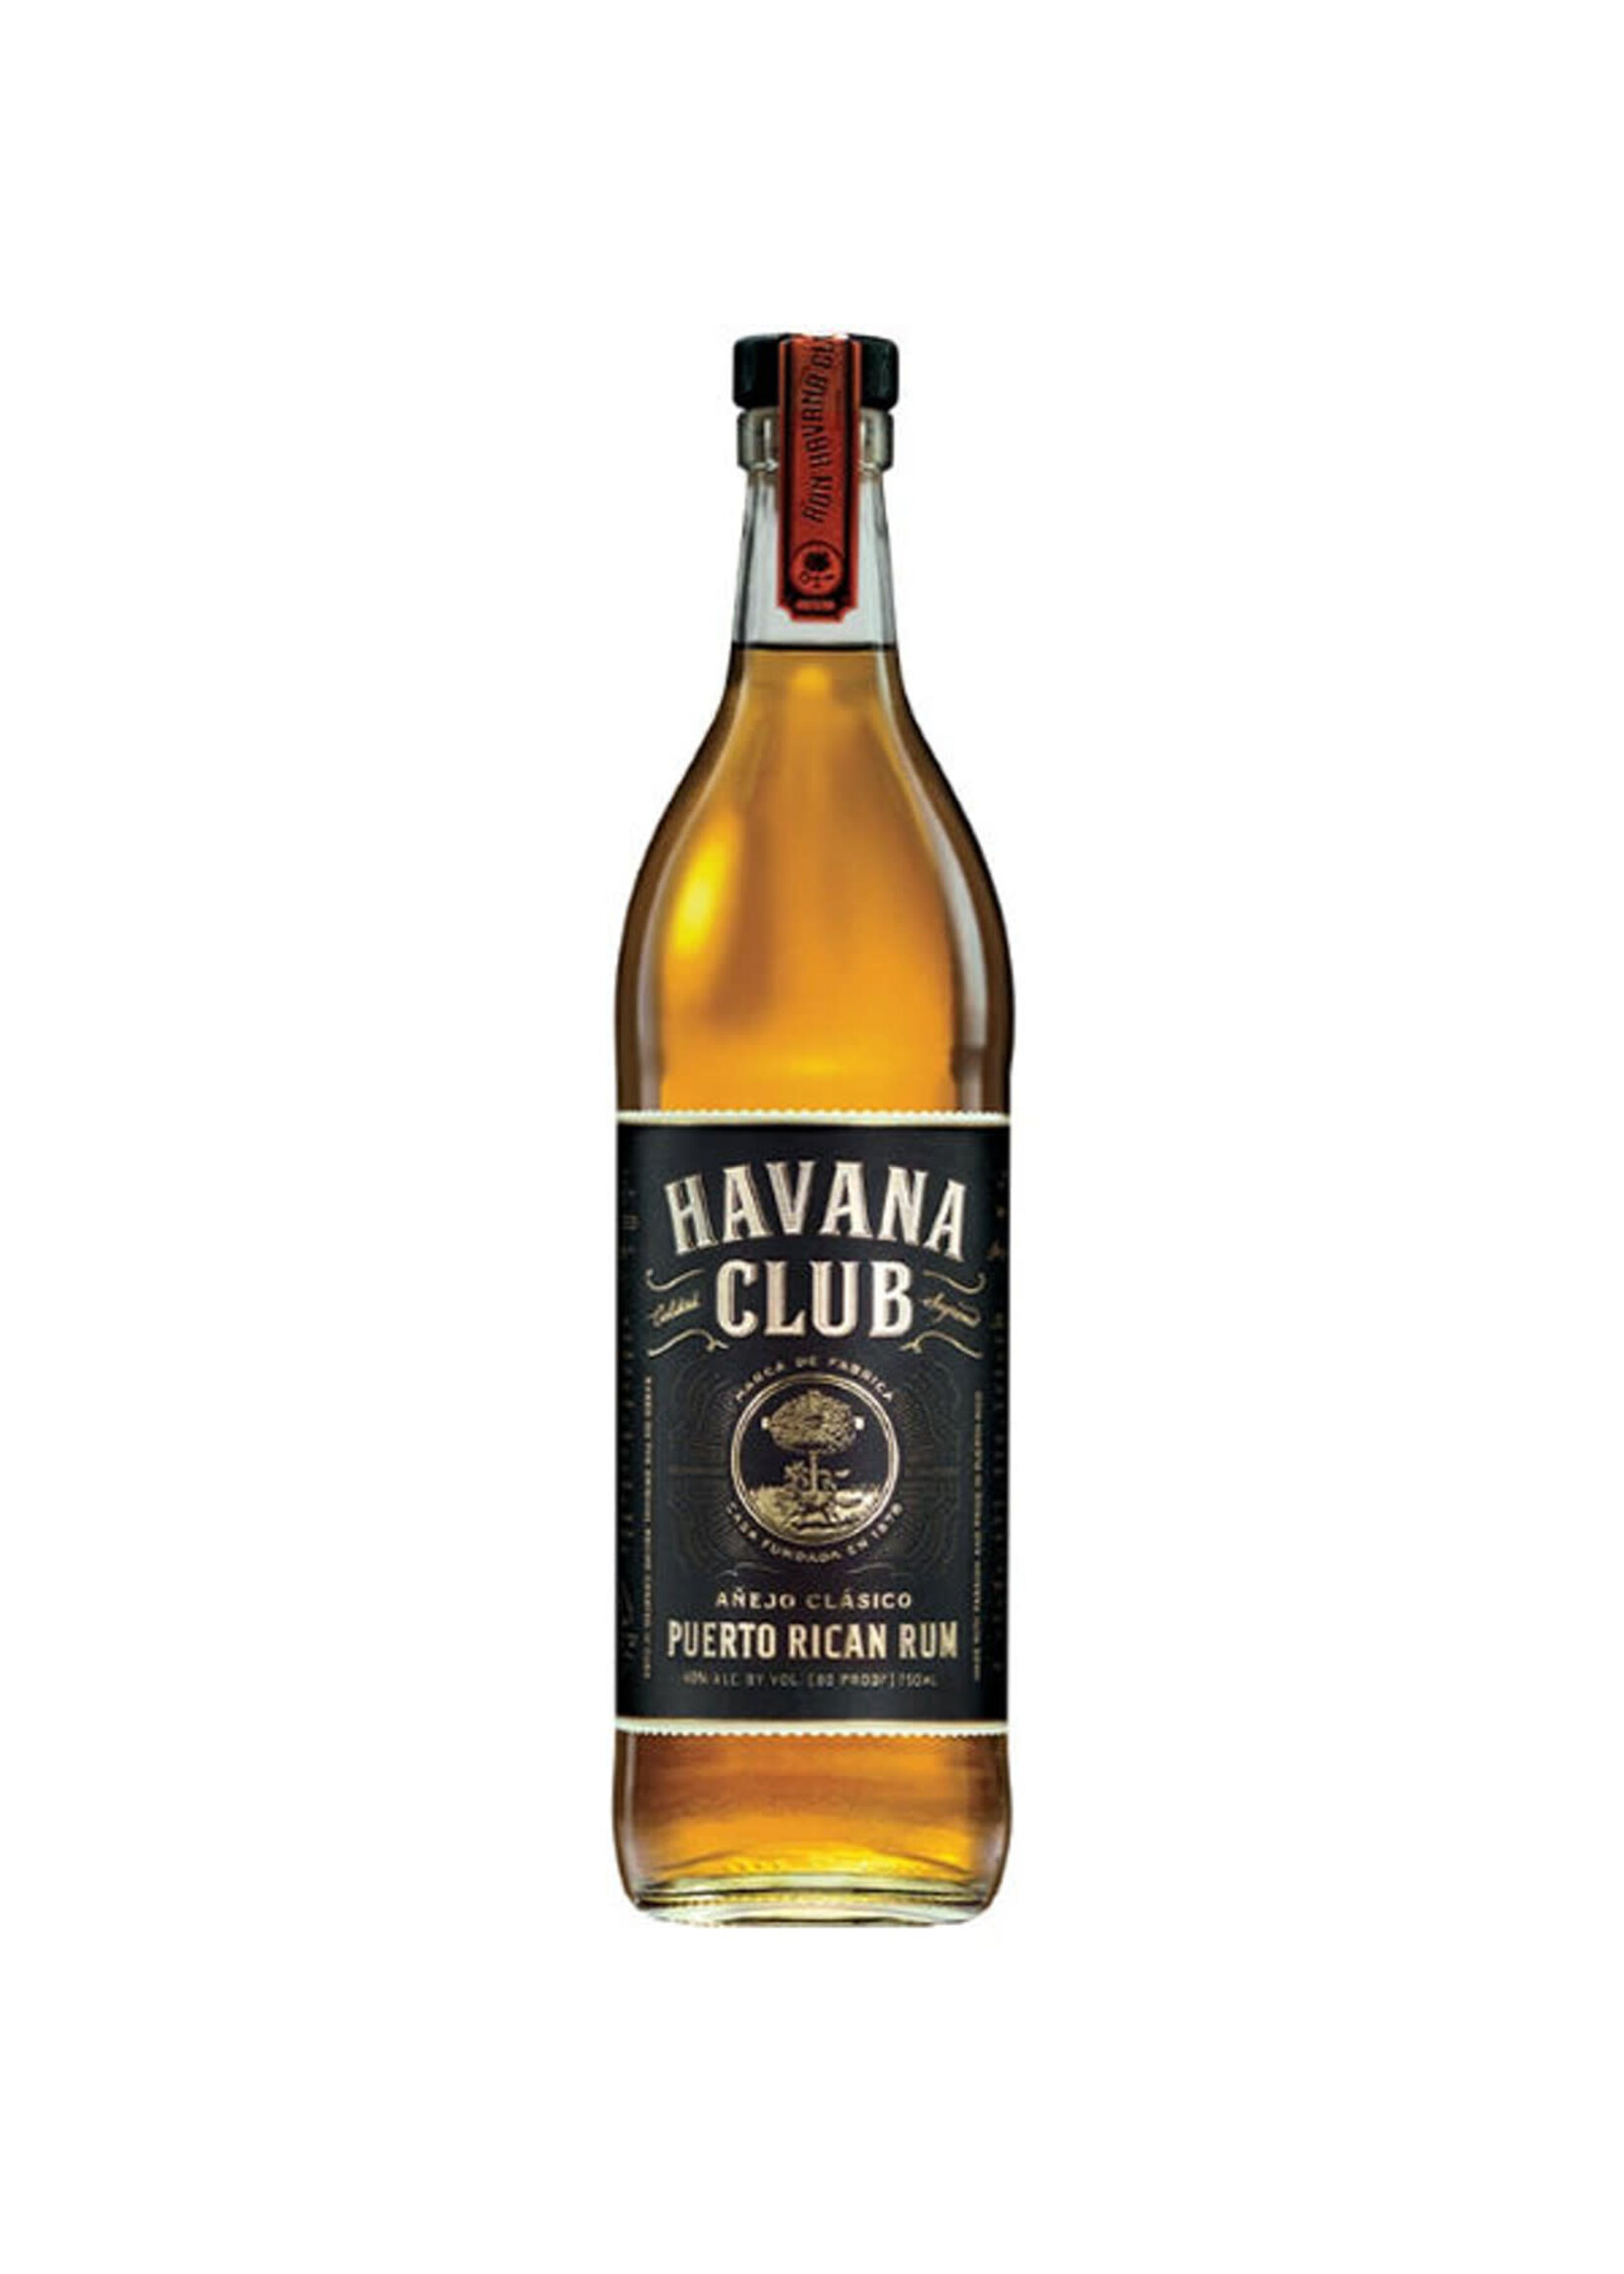 Havana Club Aged Rum Anejo Clasico 80Proof 750ml